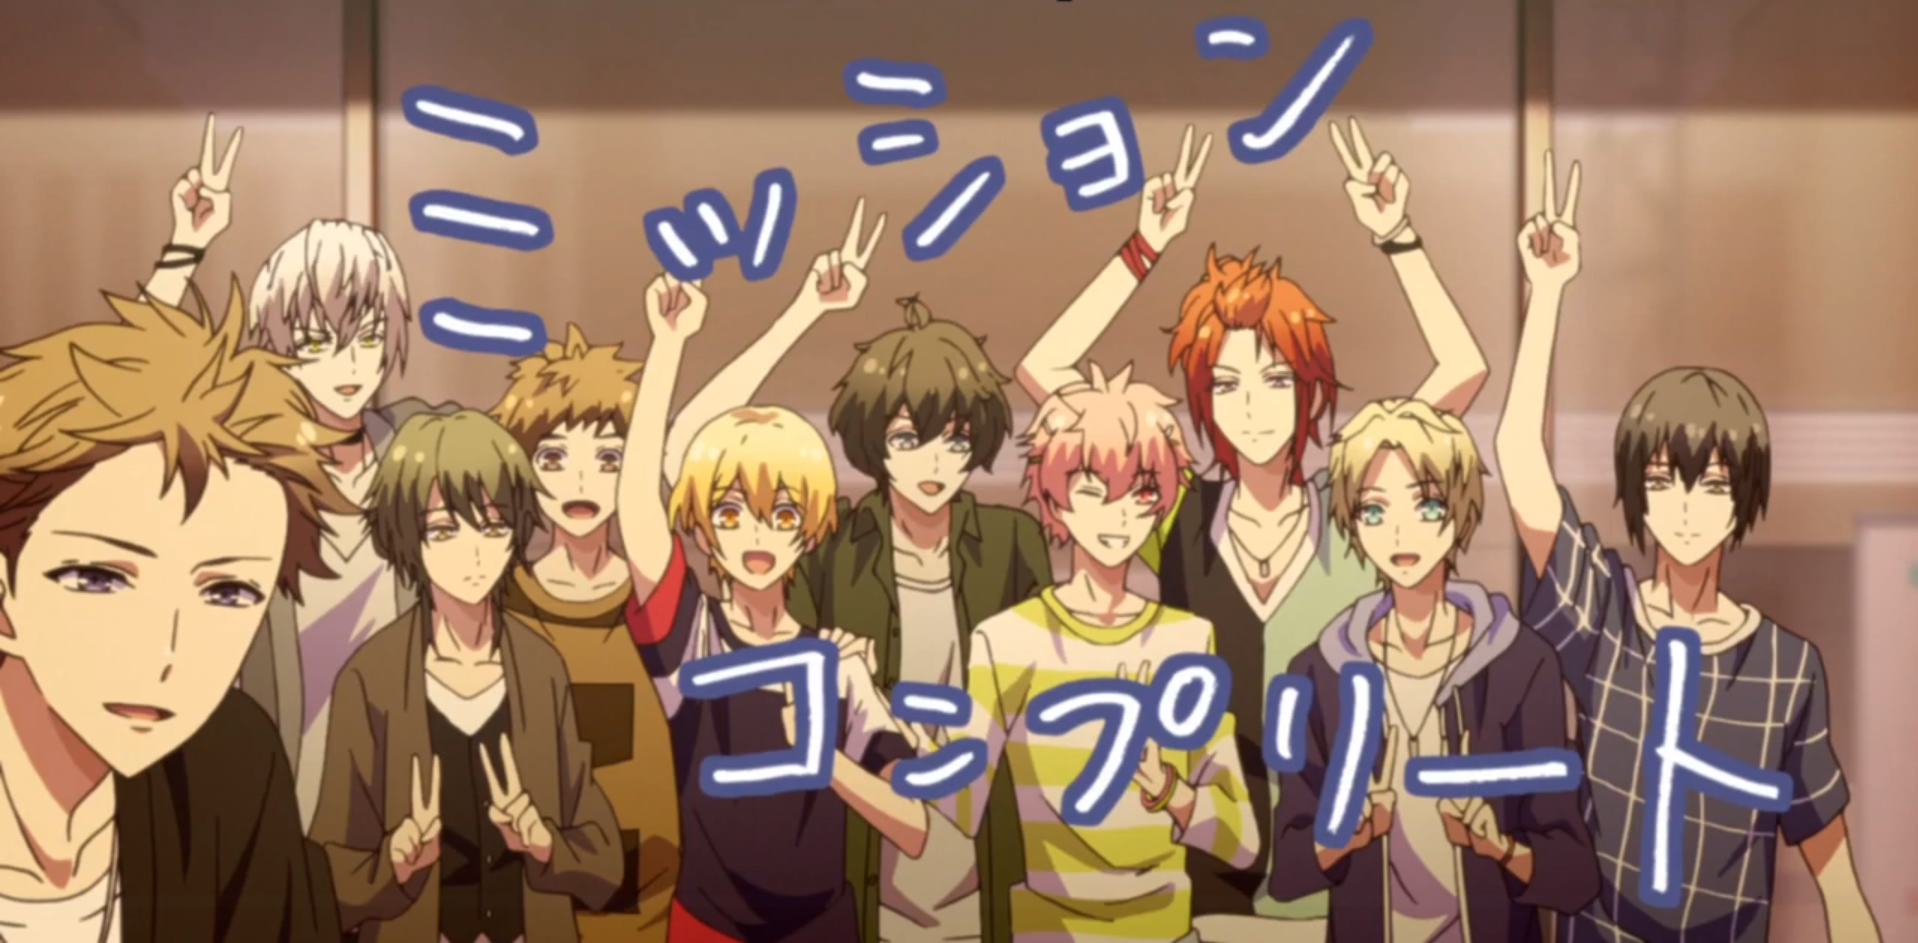 Grupo de anime masculino